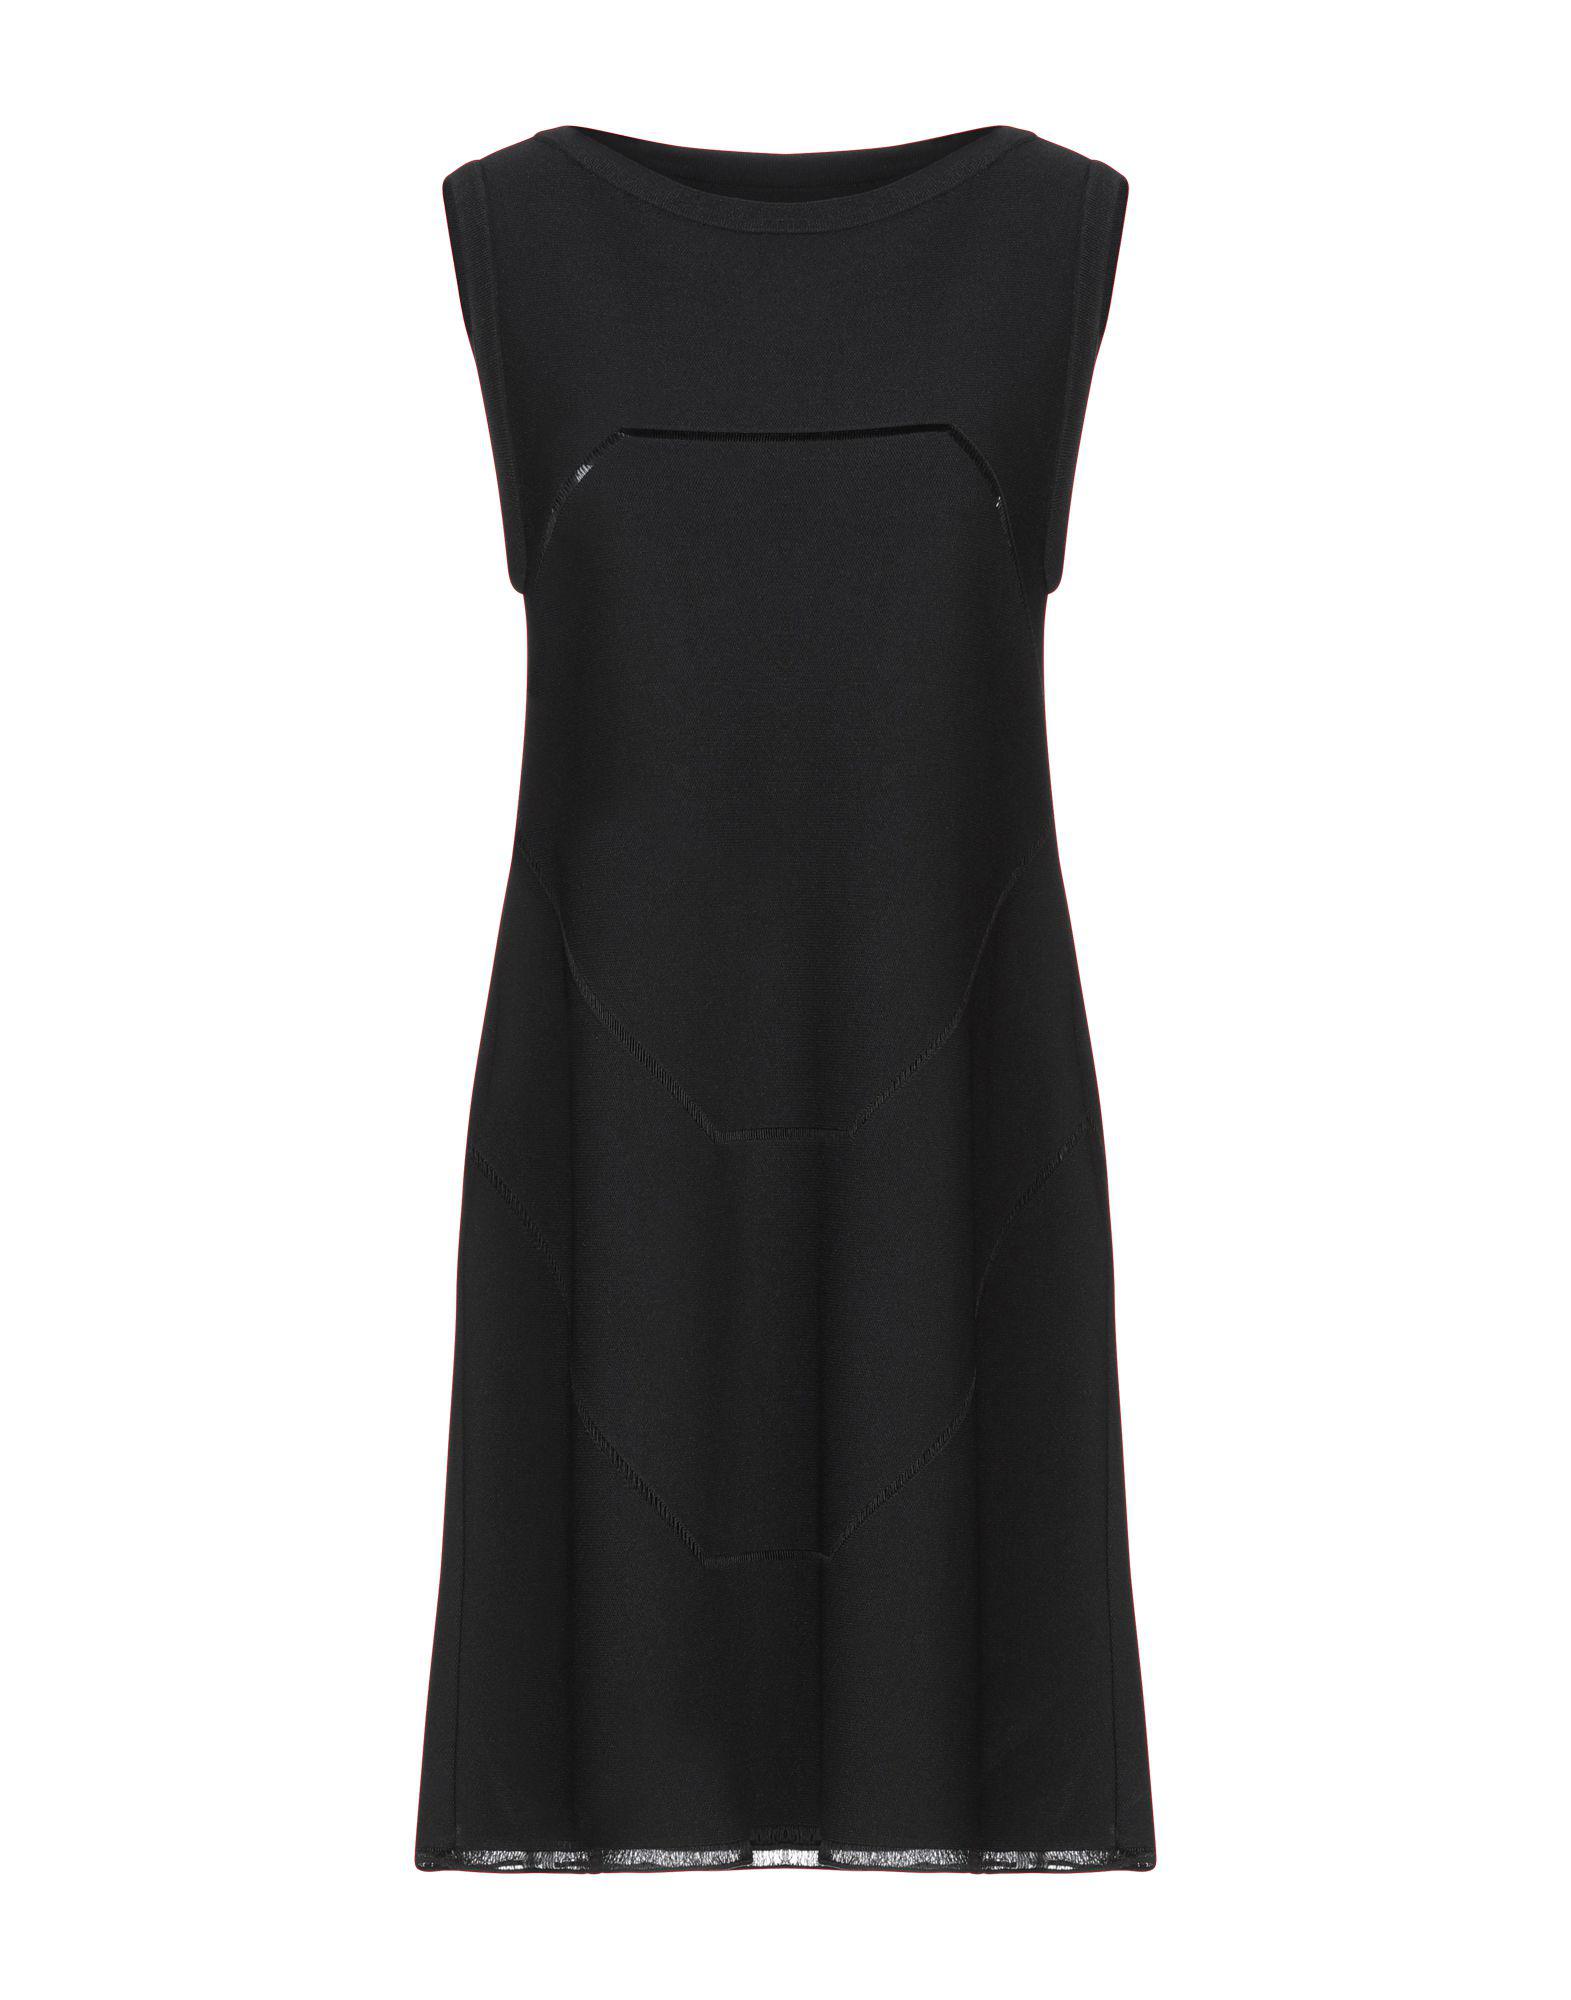 Lyst - Alaïa Short Dress in Black